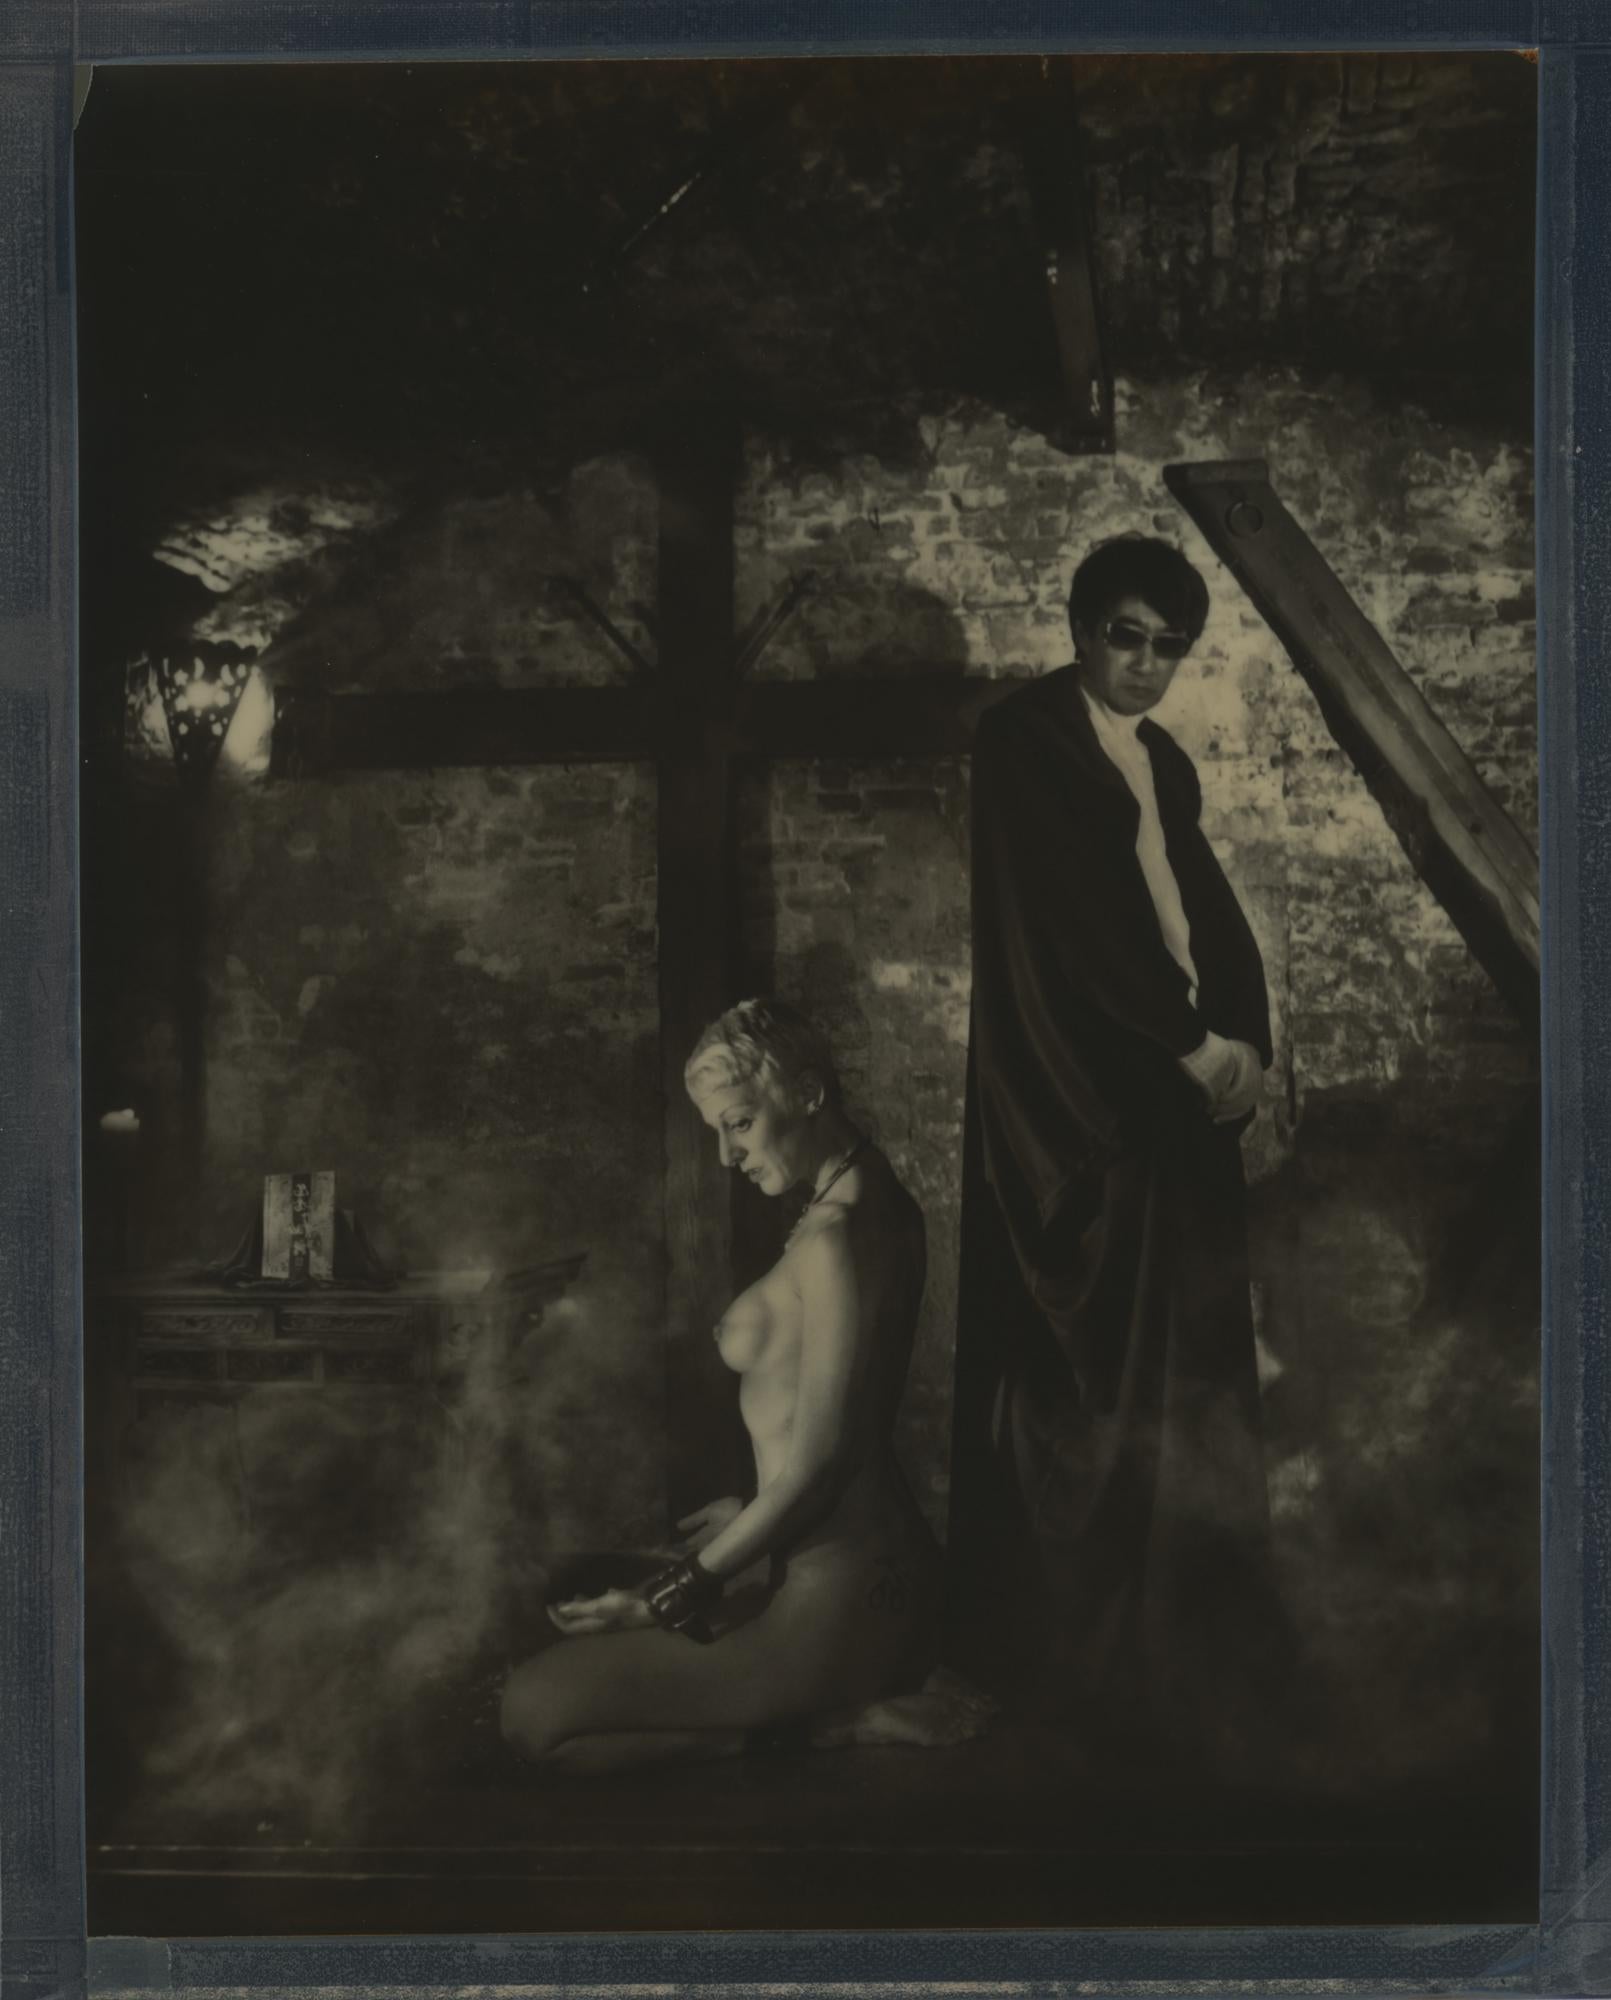 Nude Photograph xulong zhang - Sans titre - Contemporain, 21e siècle, Polaroid, photographie figurative